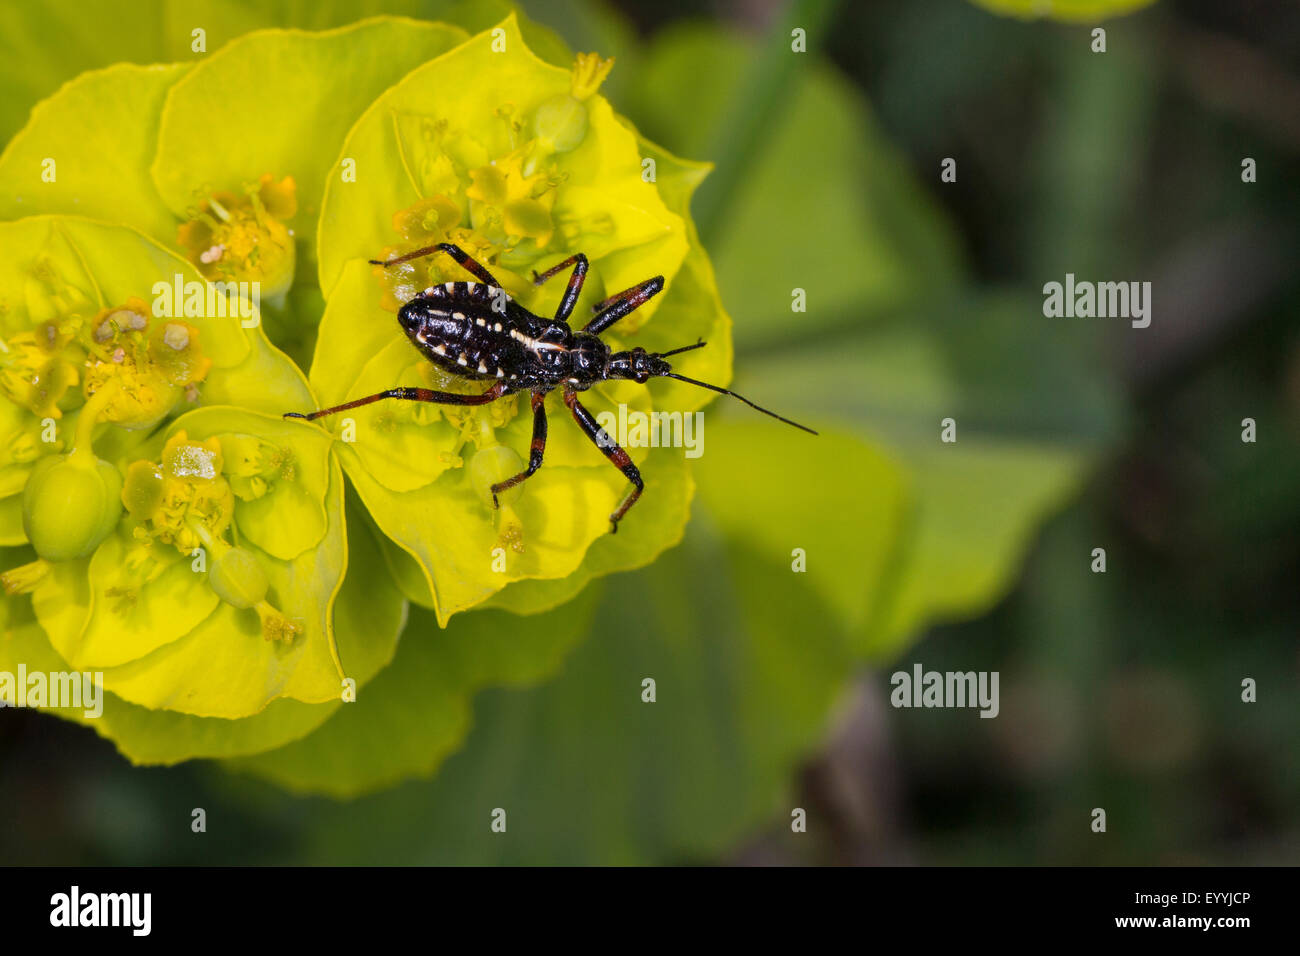 Assassin bug, conenose bugs (Rhinocoris cuspidatus, Rhynocoris cuspidatus), ninfa su un fiore giallo, Germania Foto Stock